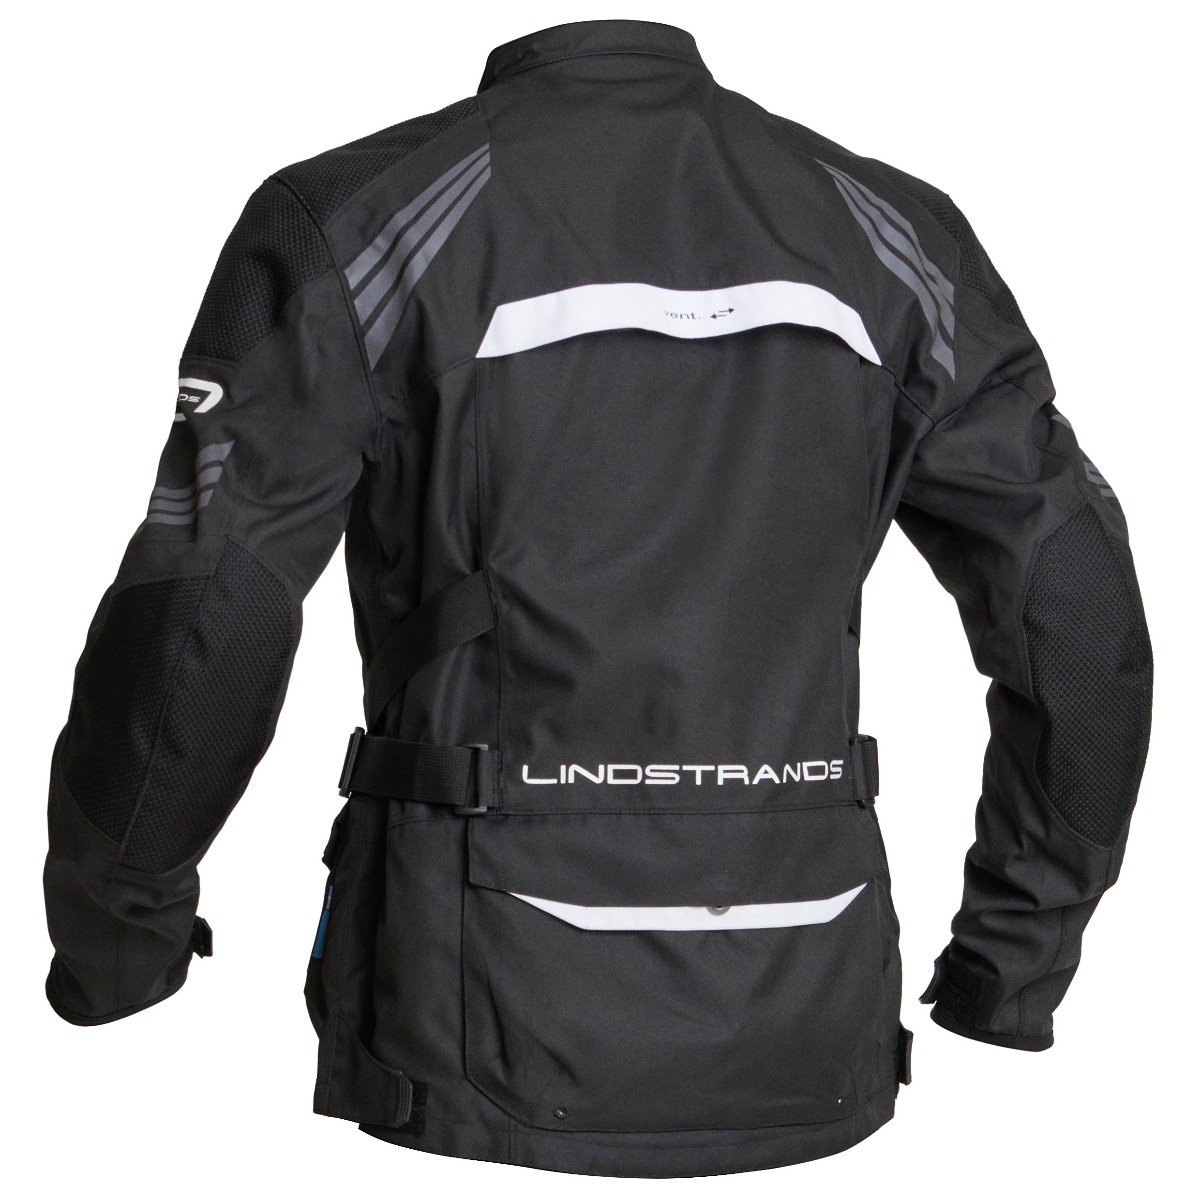 Image of Lindstrands Transtrand Jacket Black White Size 50 ID 6438235187861